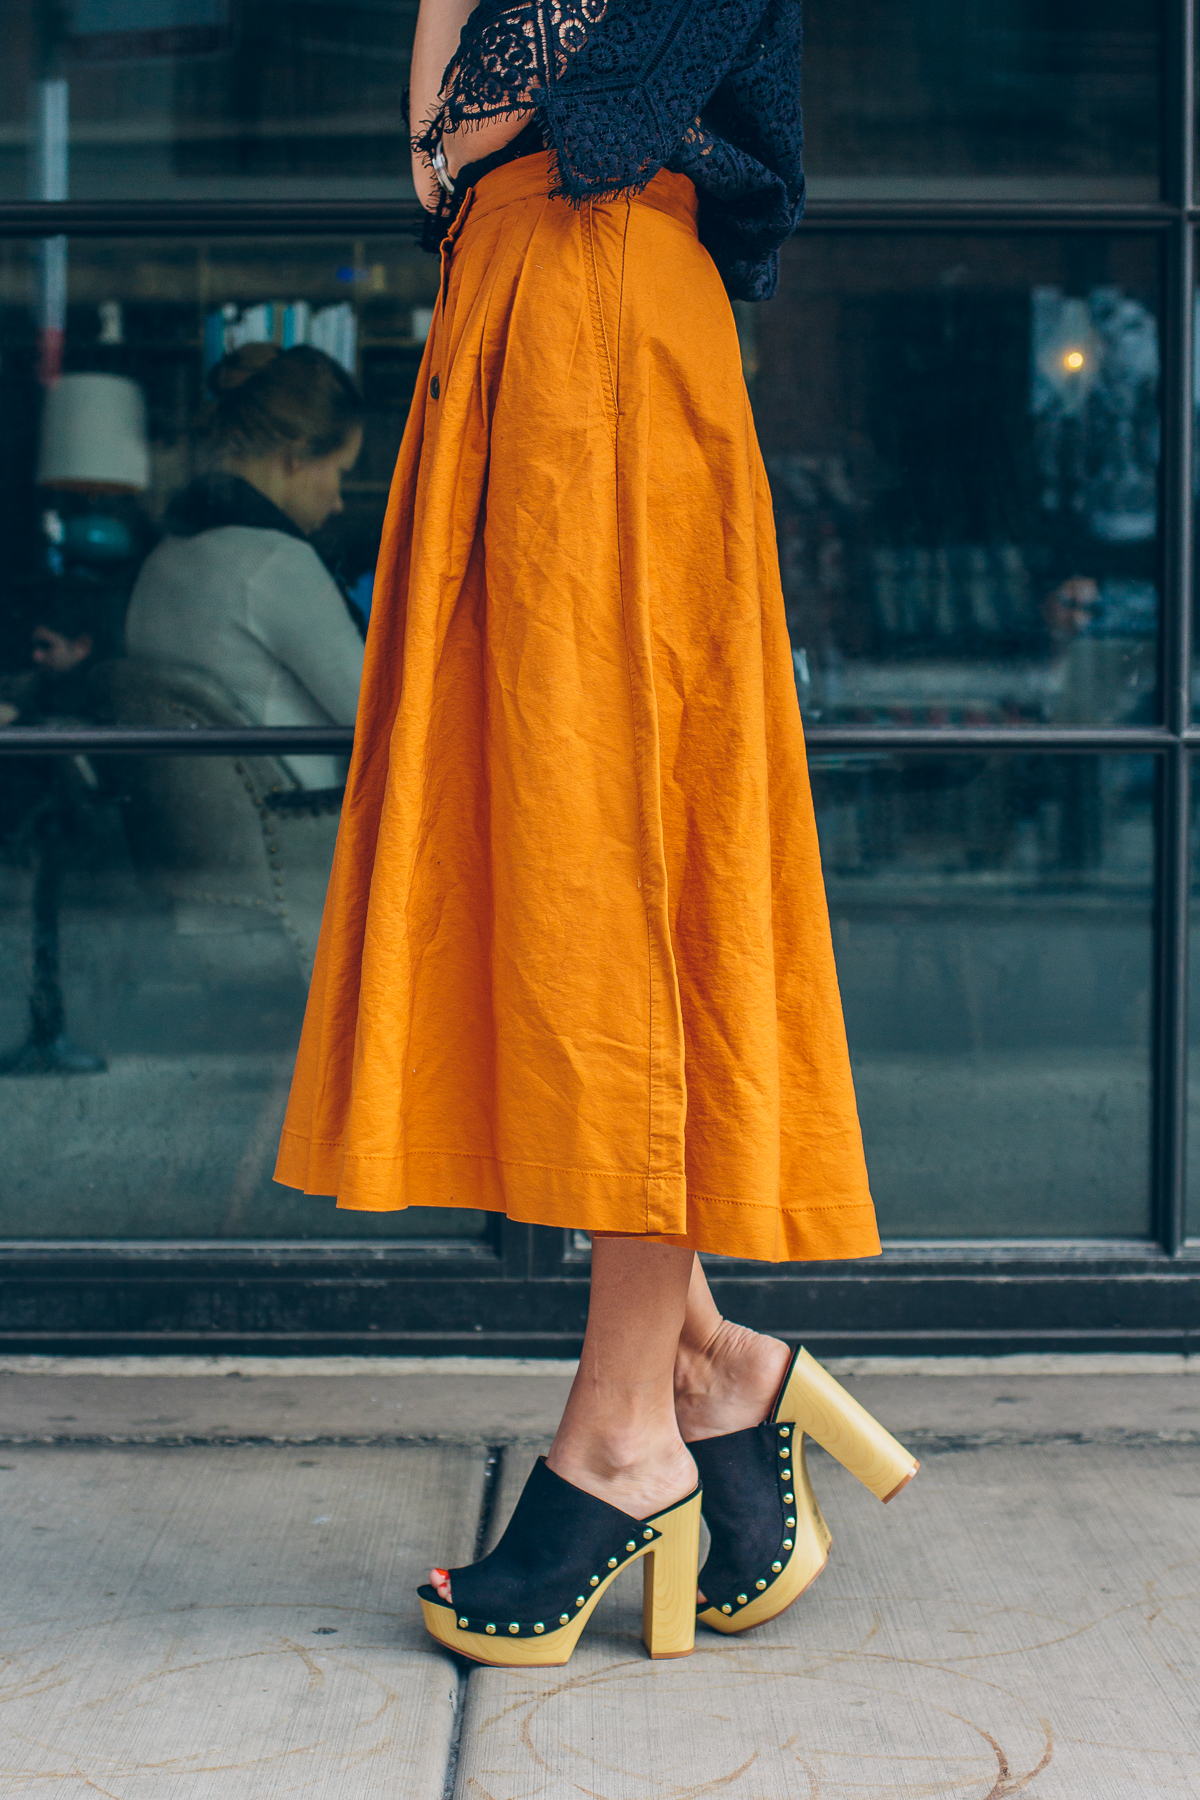 midi skirt, platform mules, spring outfit idea — via @TheFoxandShe